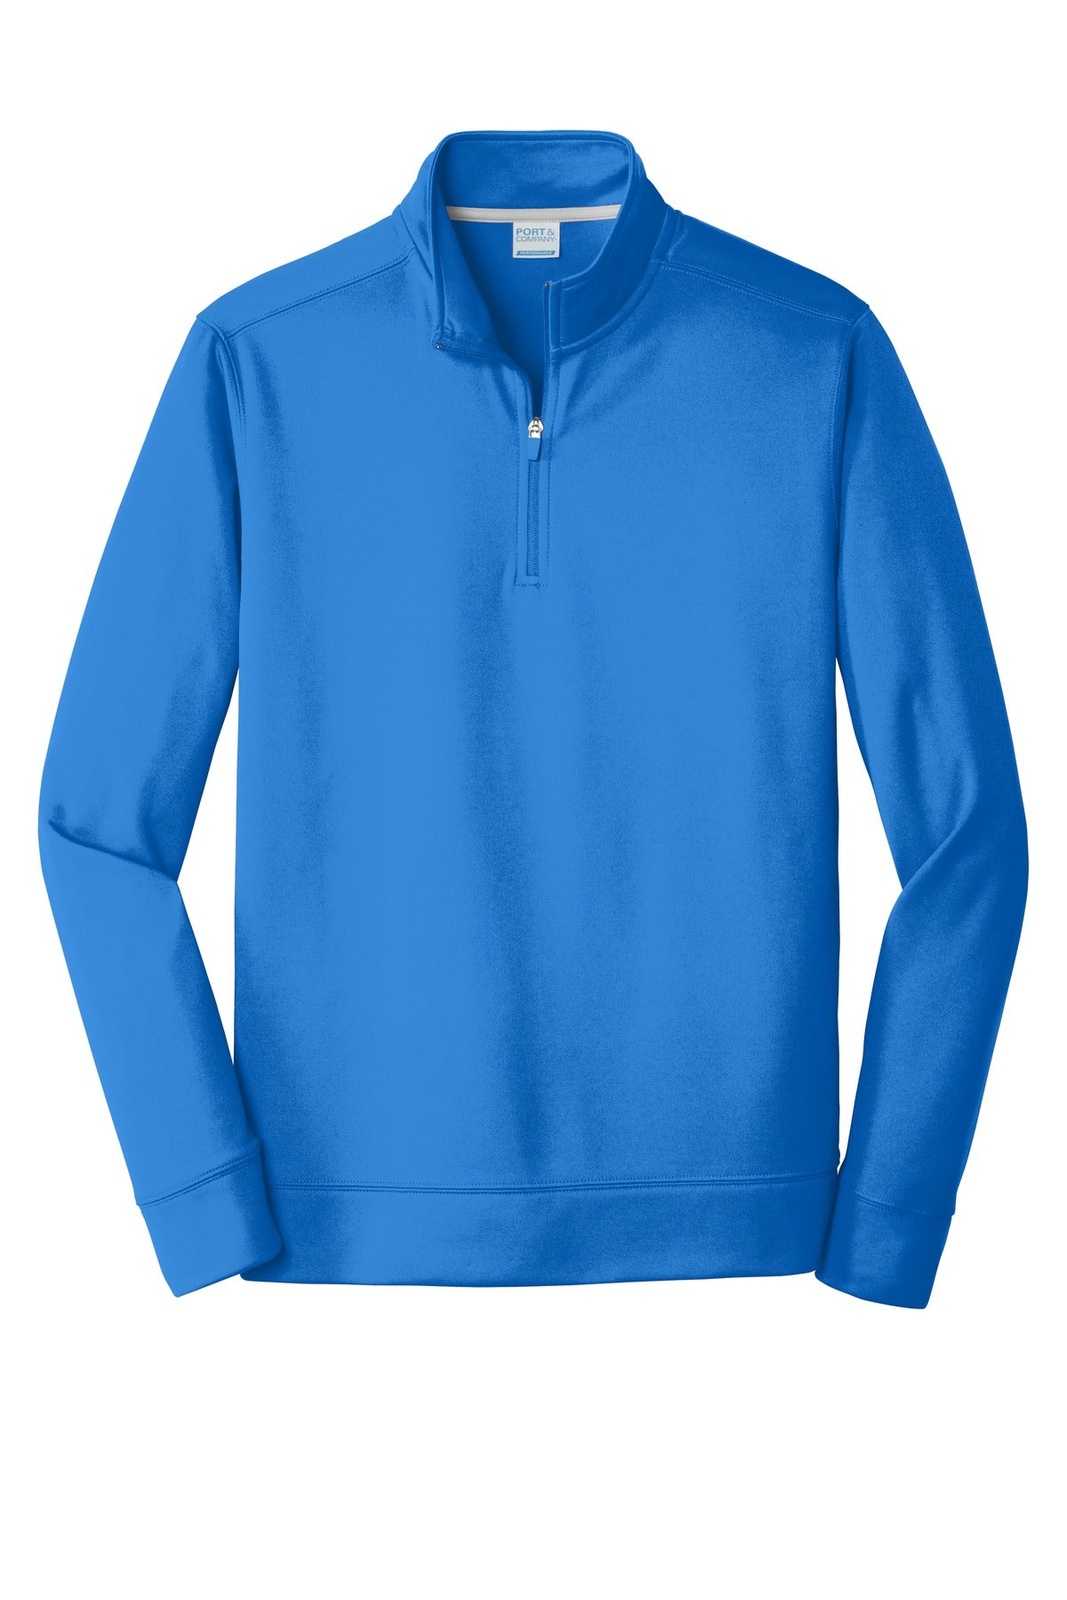 Port &amp; Company PC590Q Fleece 1/4-Zip Pullover Sweatshirt - Royal - HIT a Double - 5